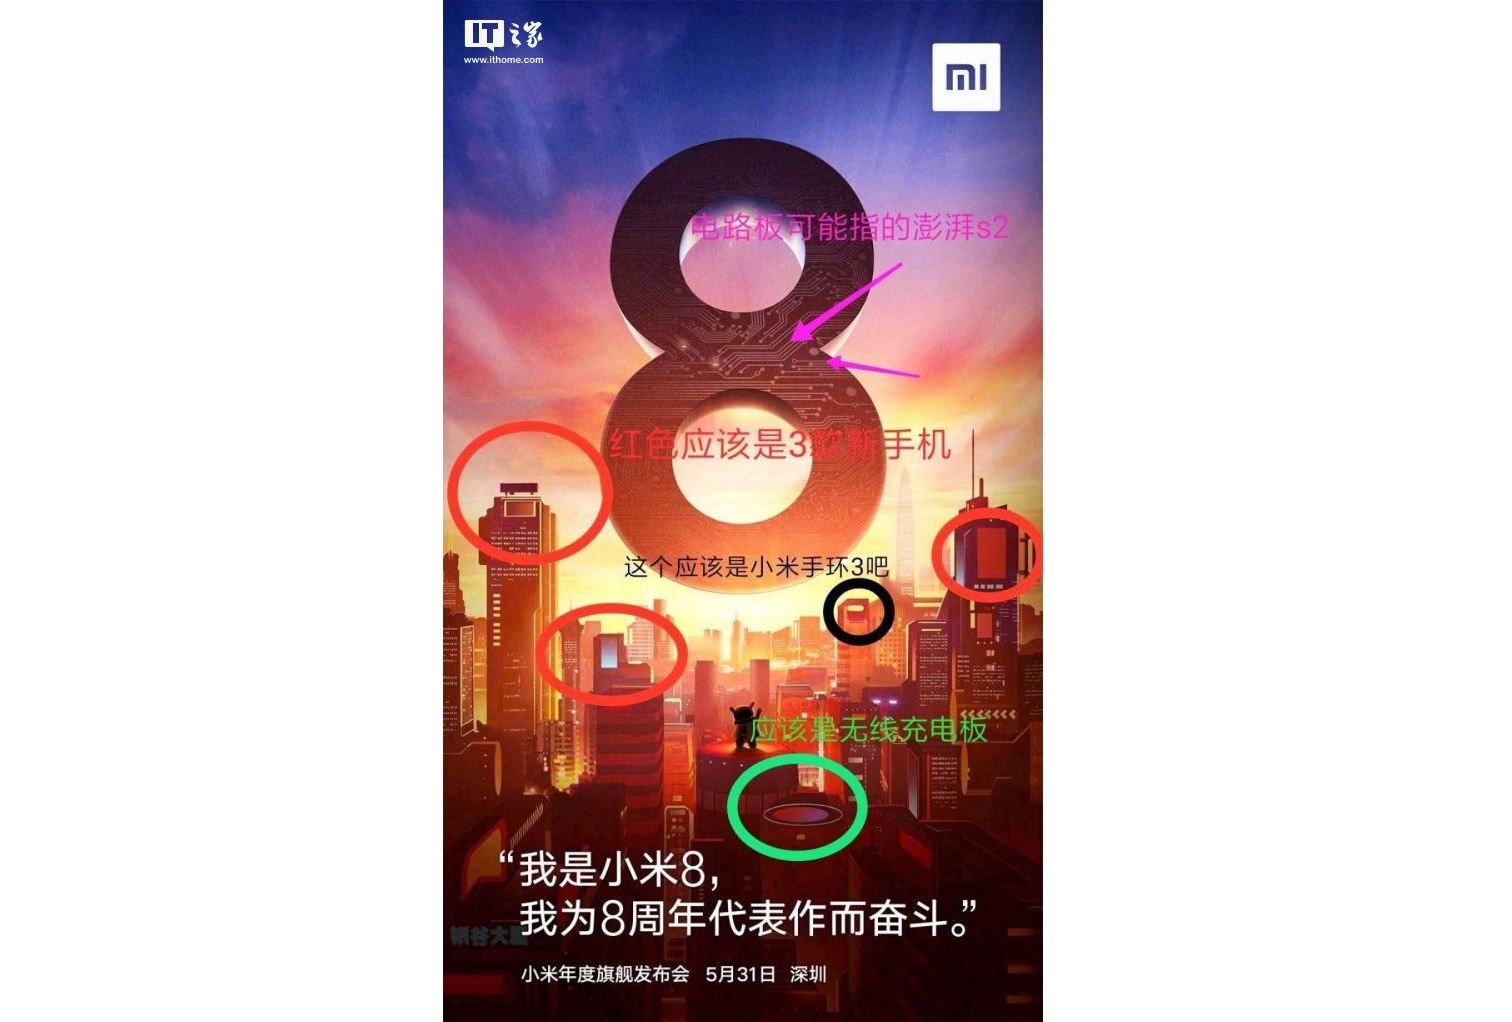 Xiaomi Mi 8 beraberinde iki yeni telefon daha getirebilir